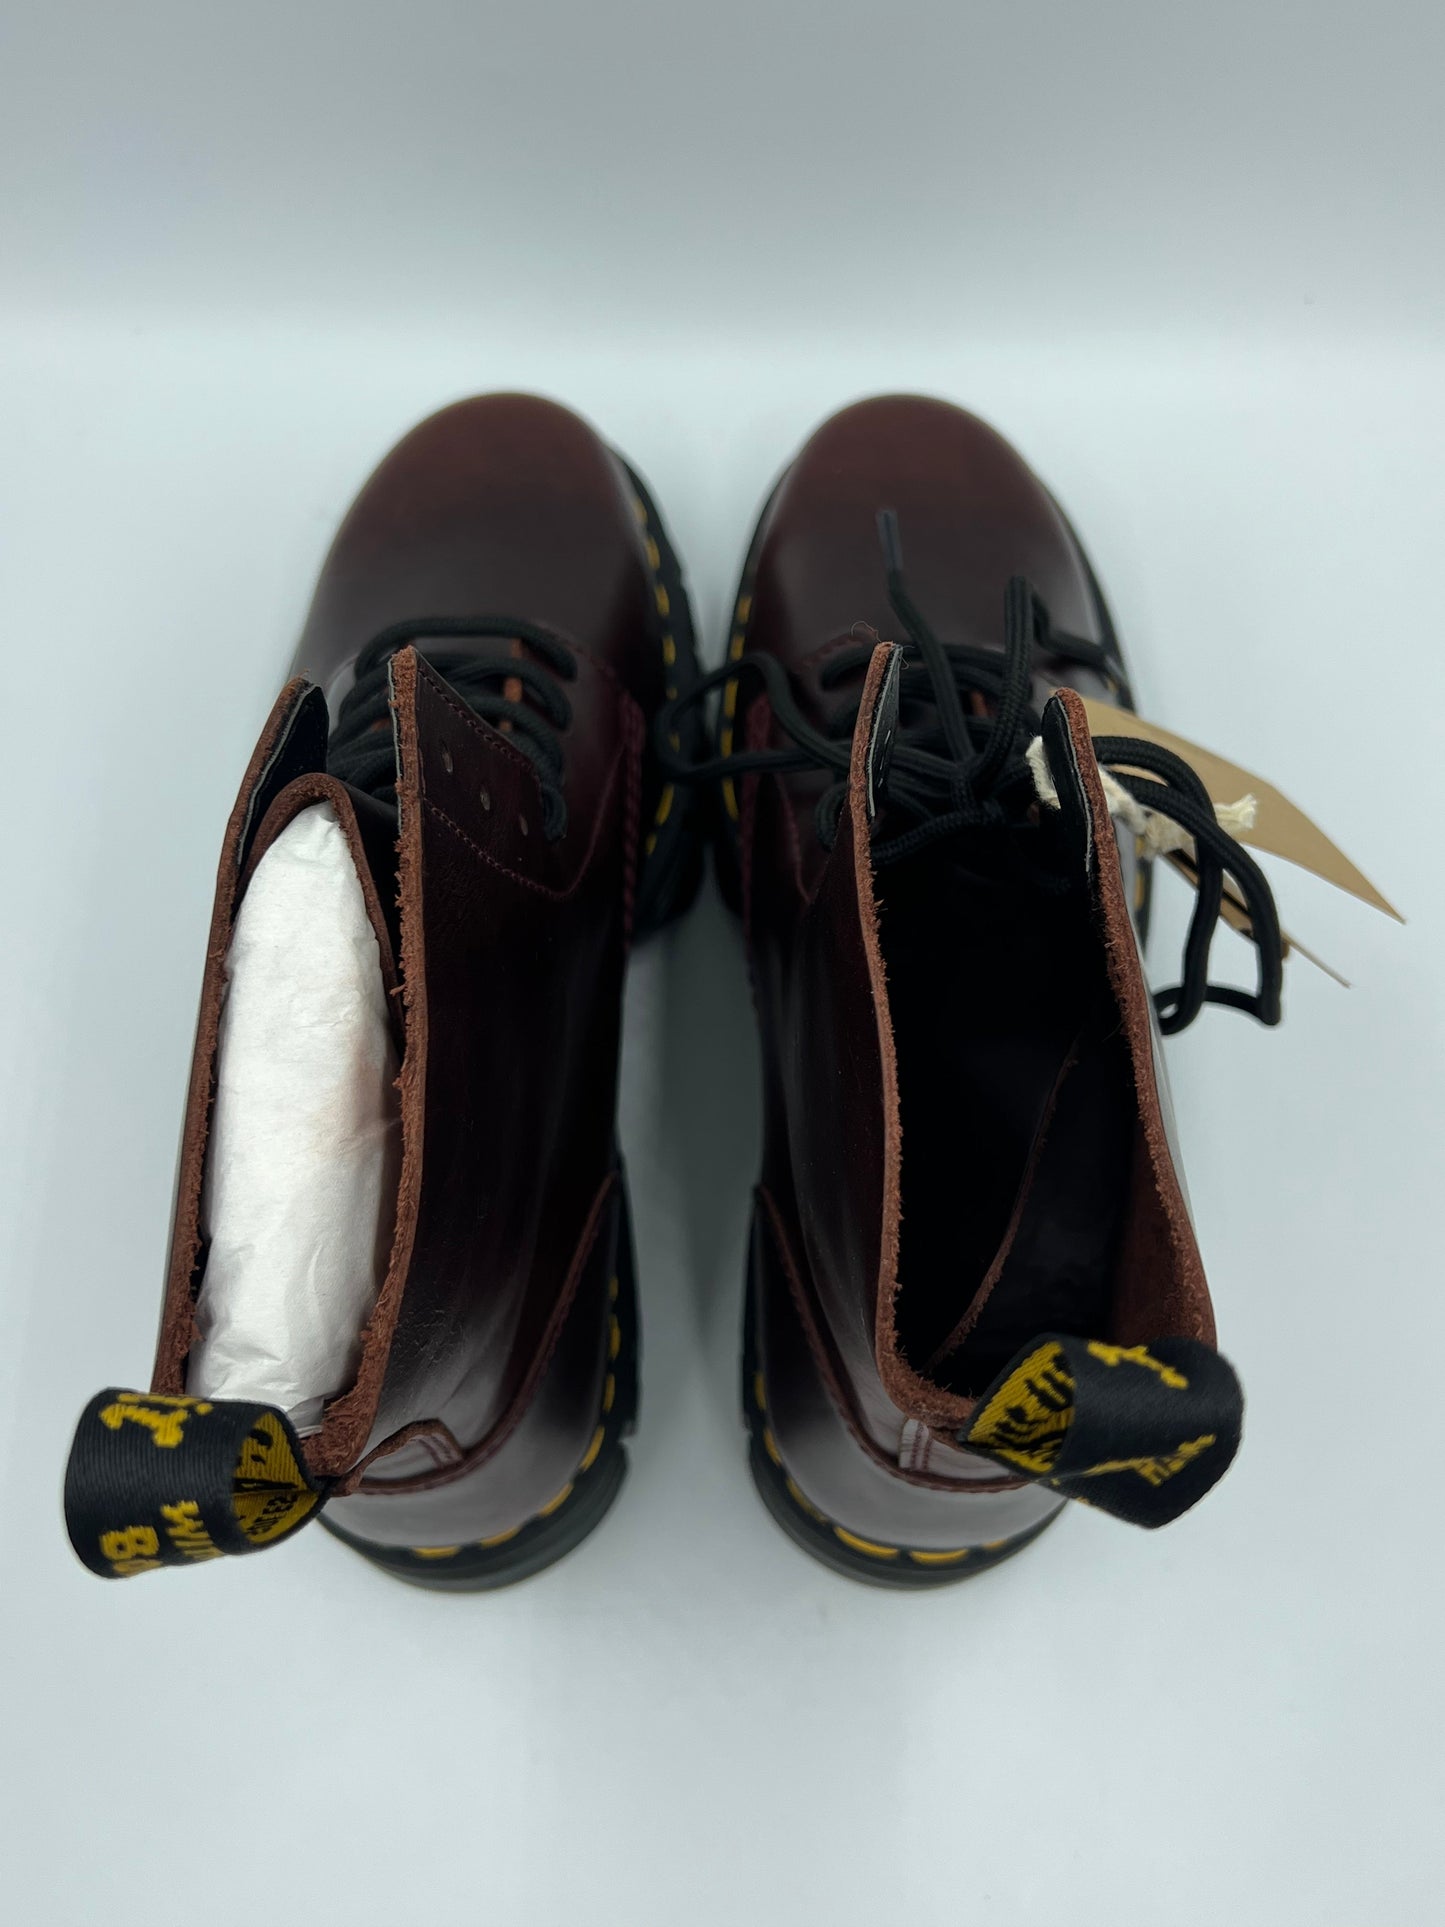 New! Dr Martens Audrick Platform Boots, Size 10